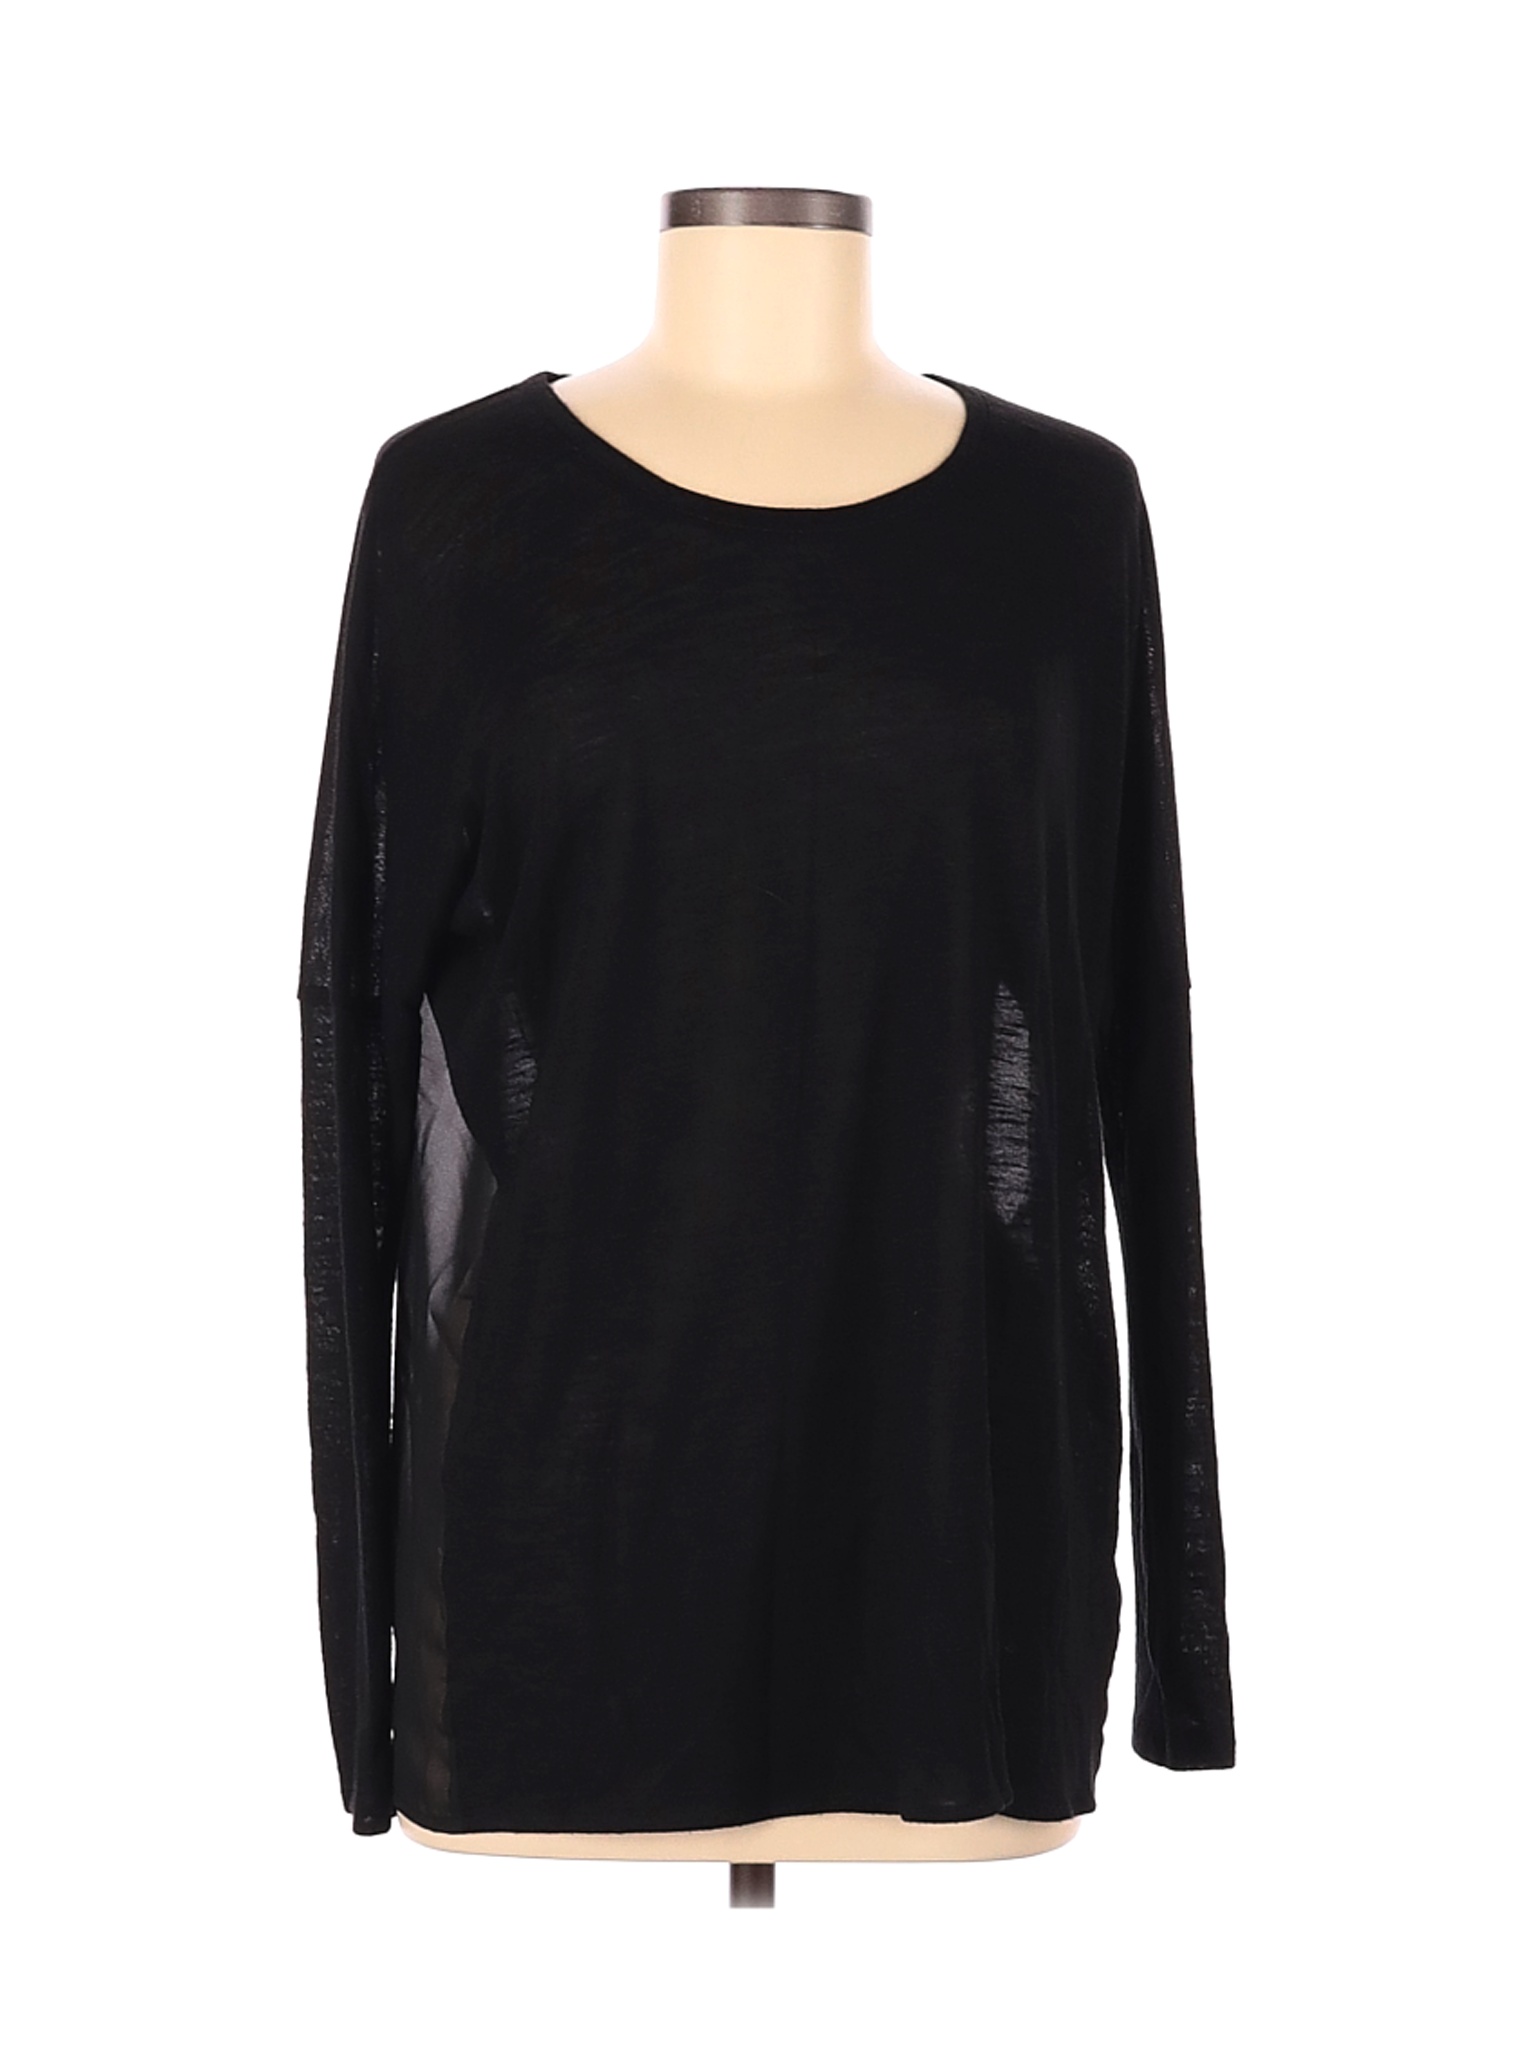 JACK Women Black Long Sleeve Top S | eBay